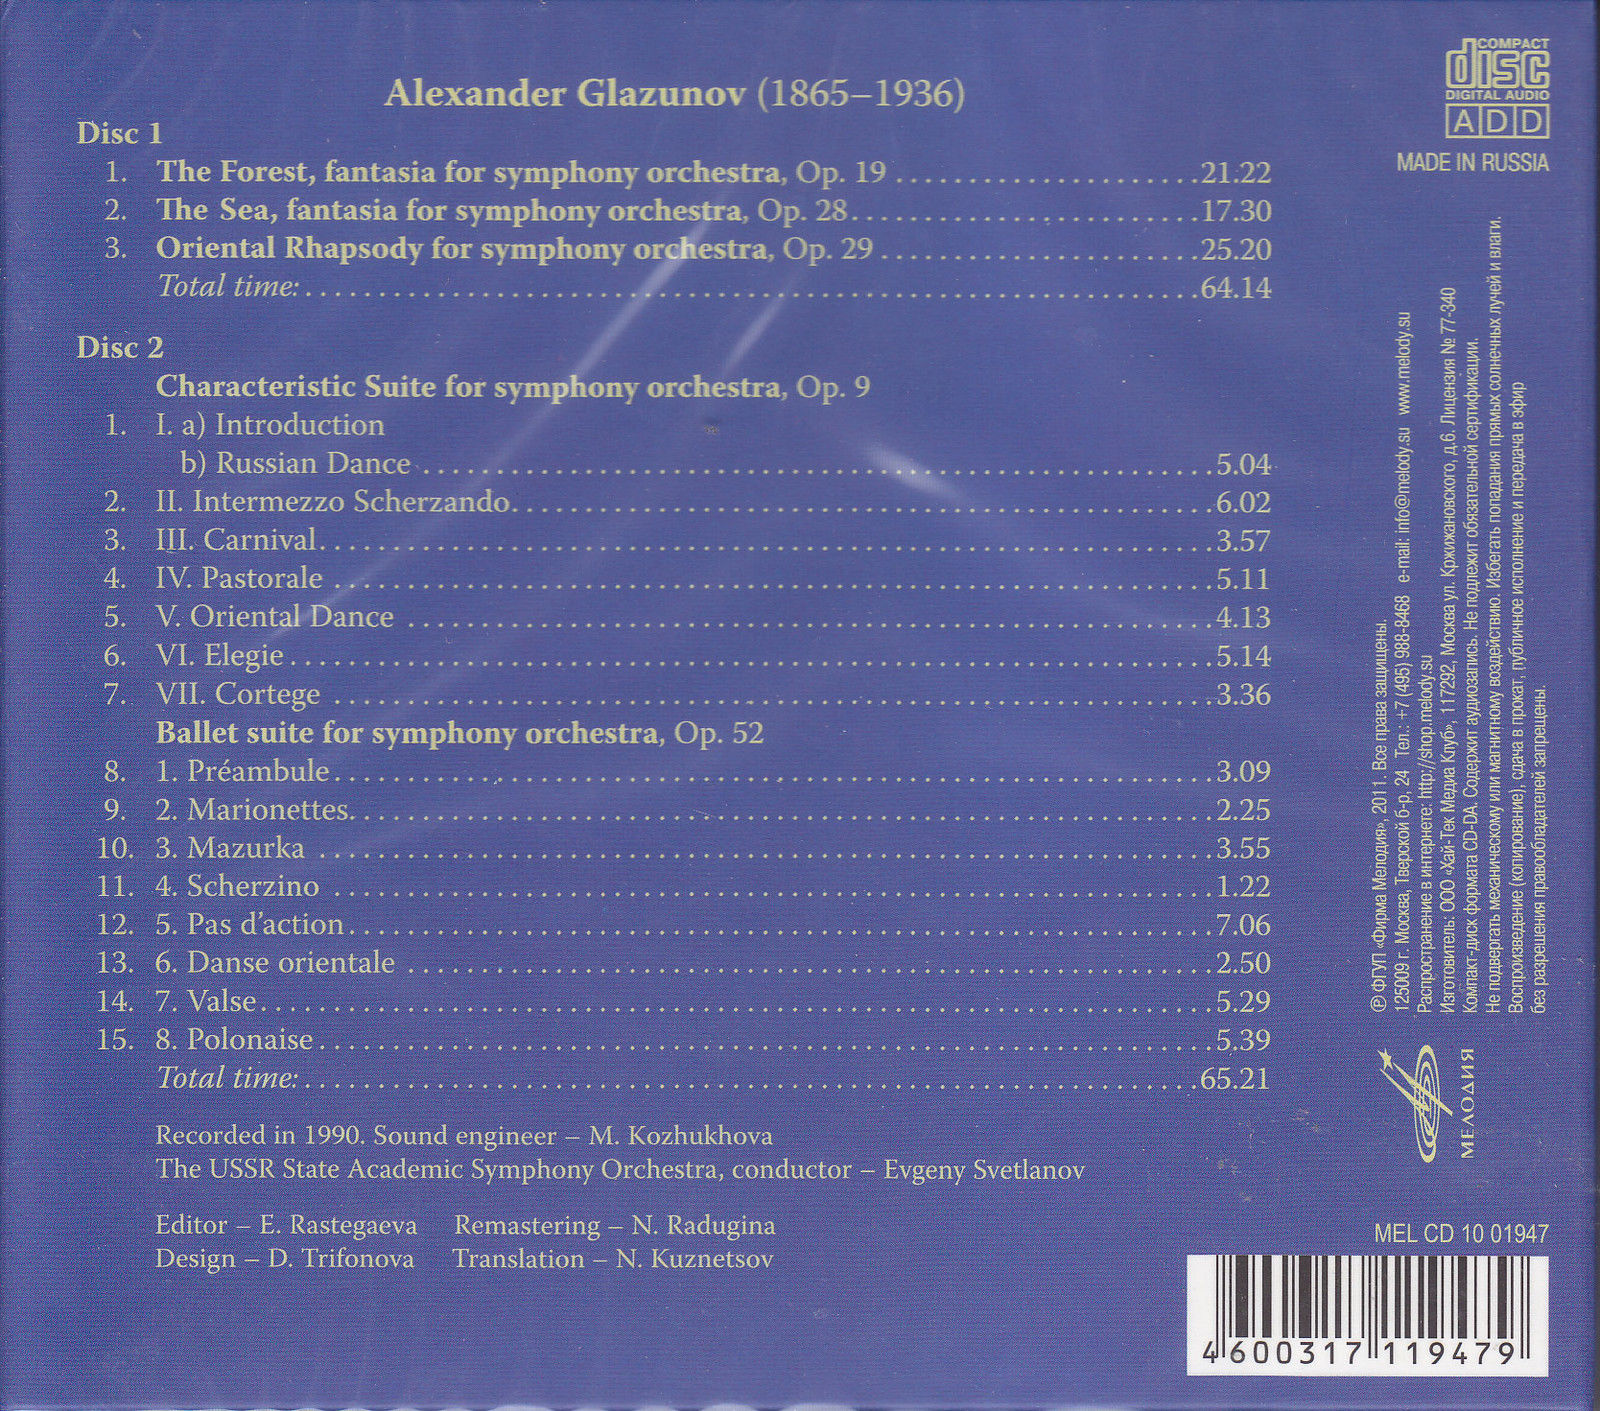 Symphonic Works by Alexander Glazunov